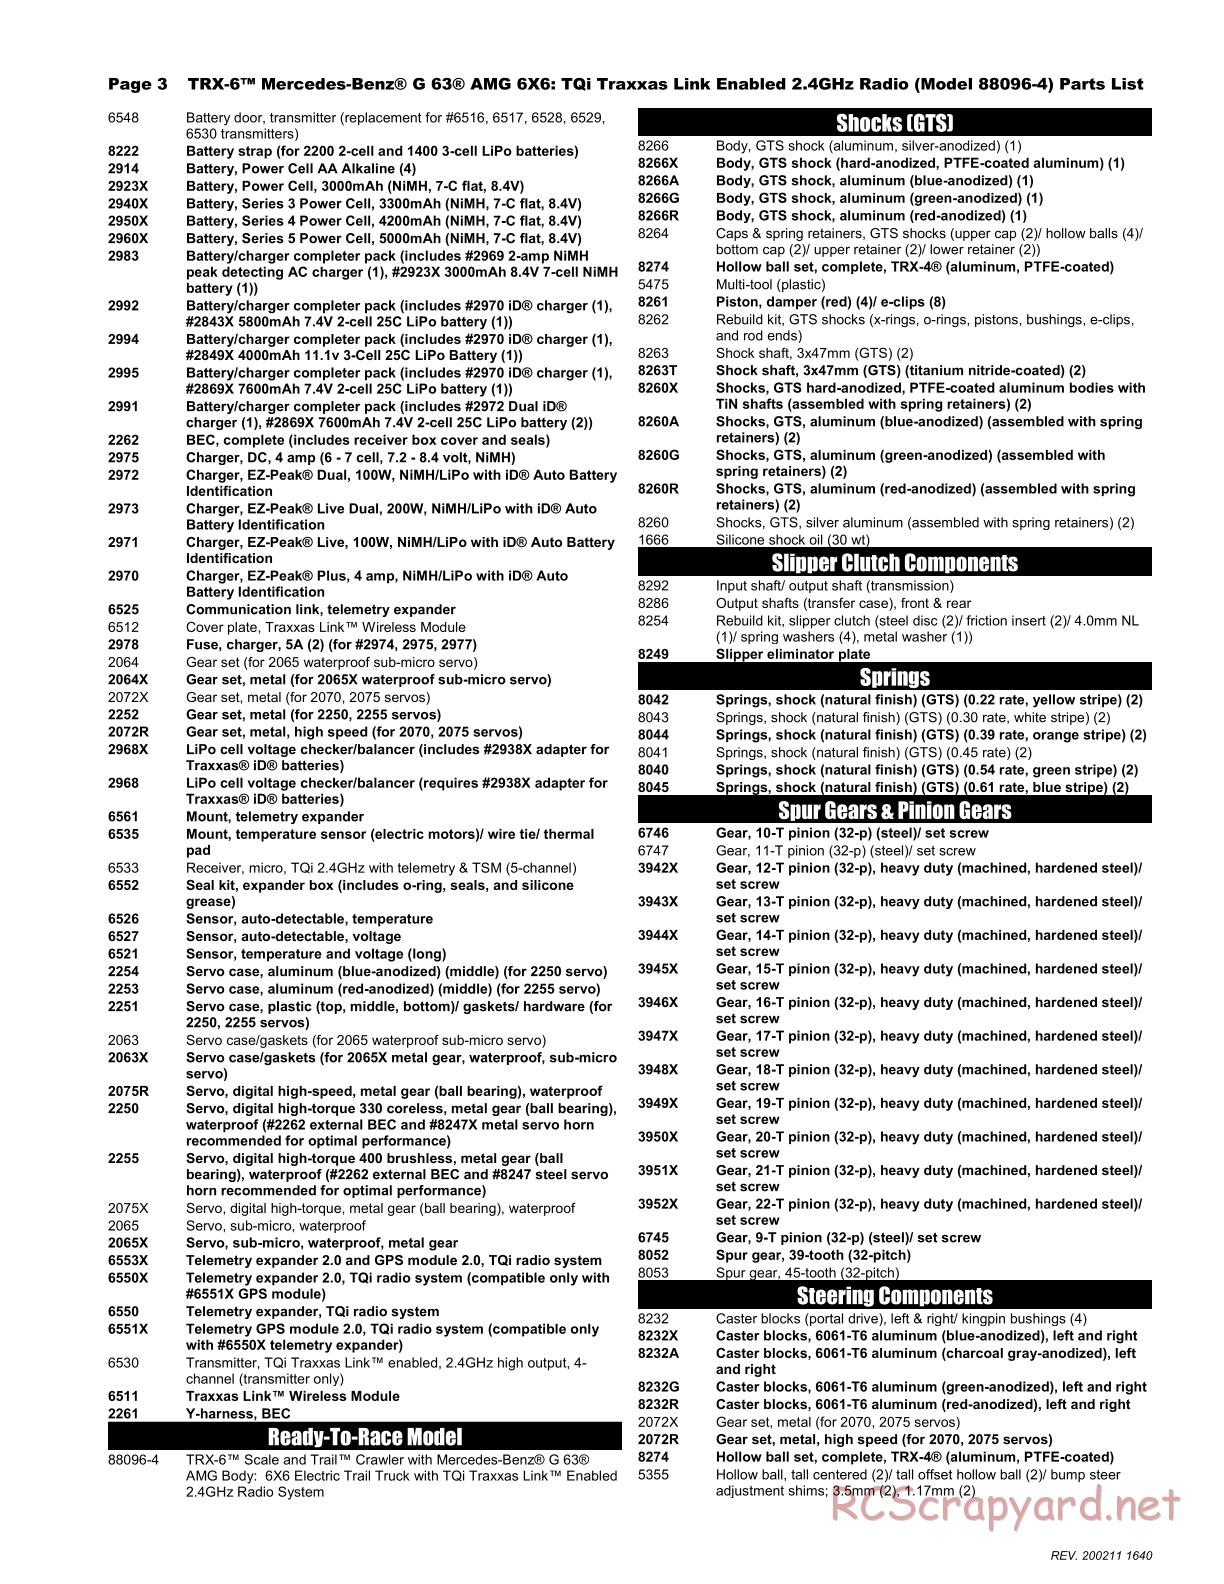 Traxxas - TRX-6 Mercedes-Benz G 63 AMG 6x6 - Parts List - Page 3